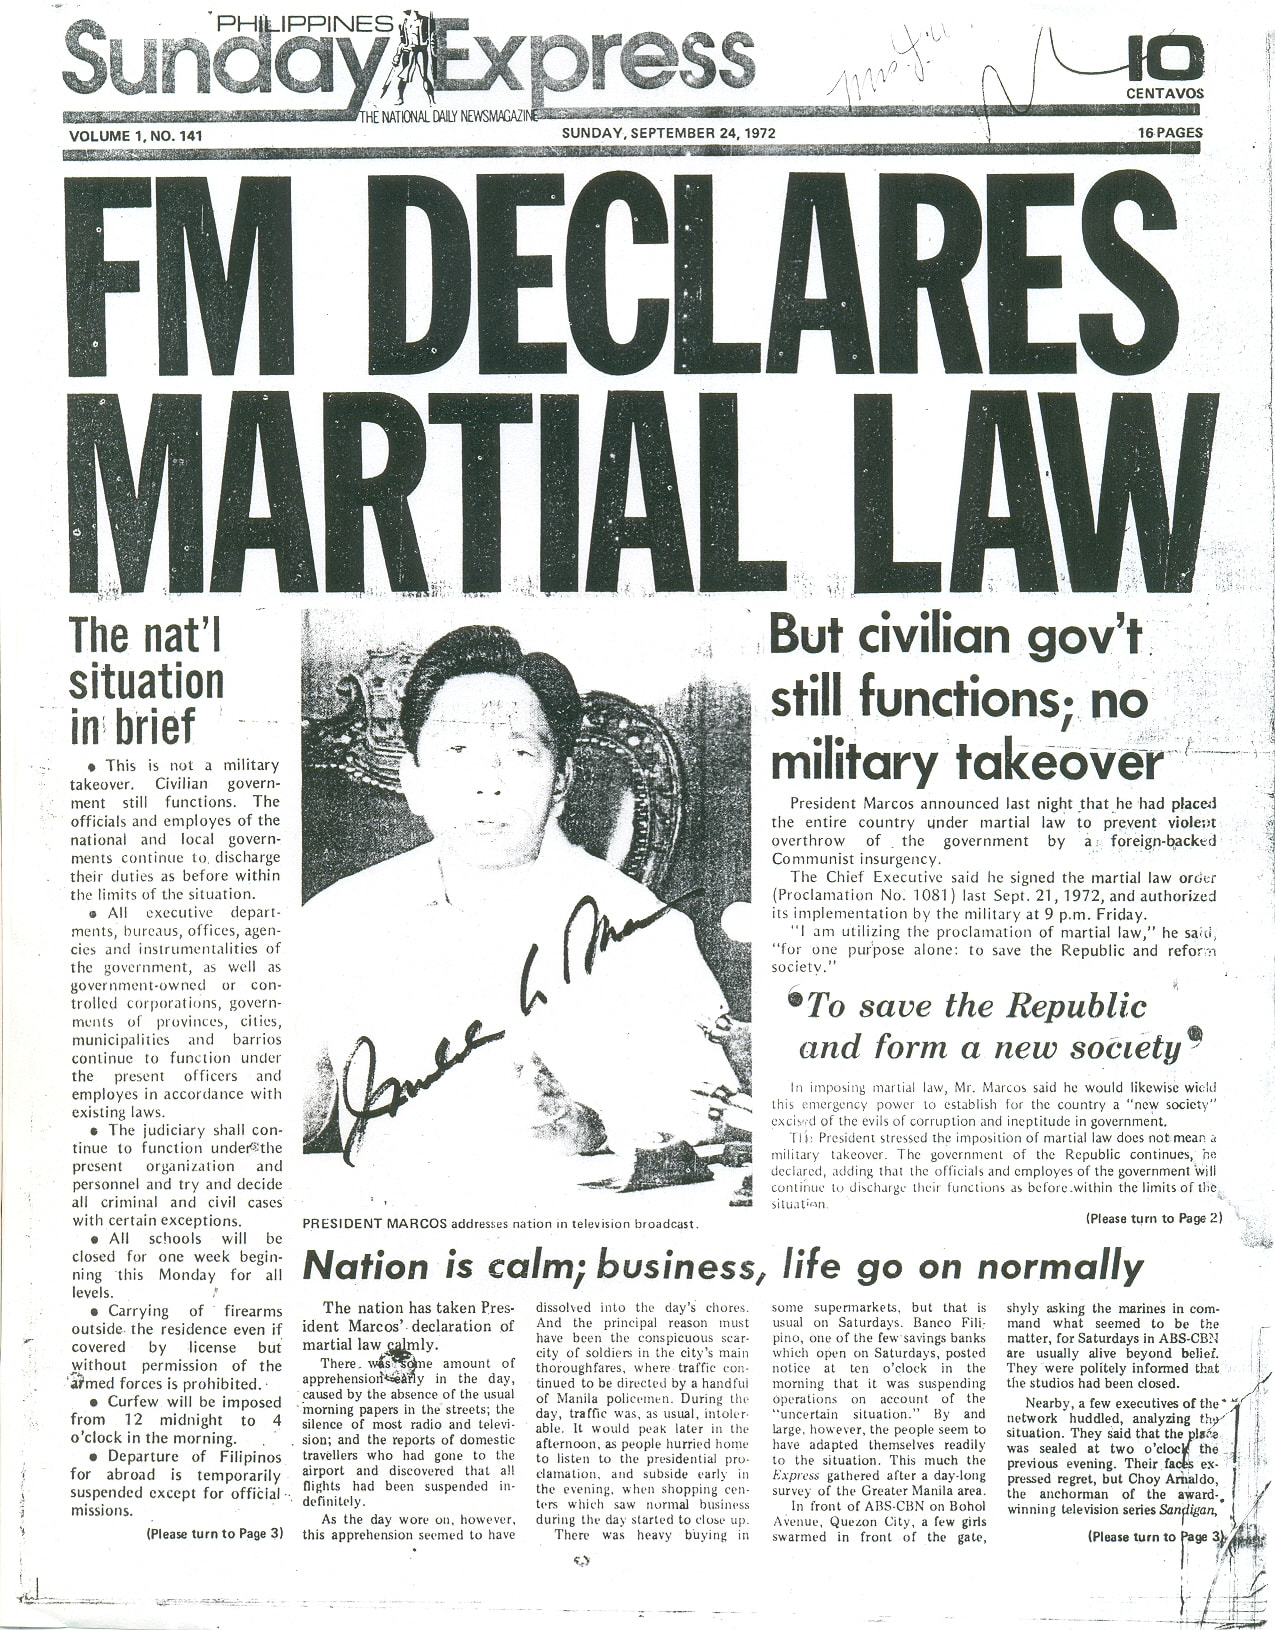 martial law philippines marcos essay